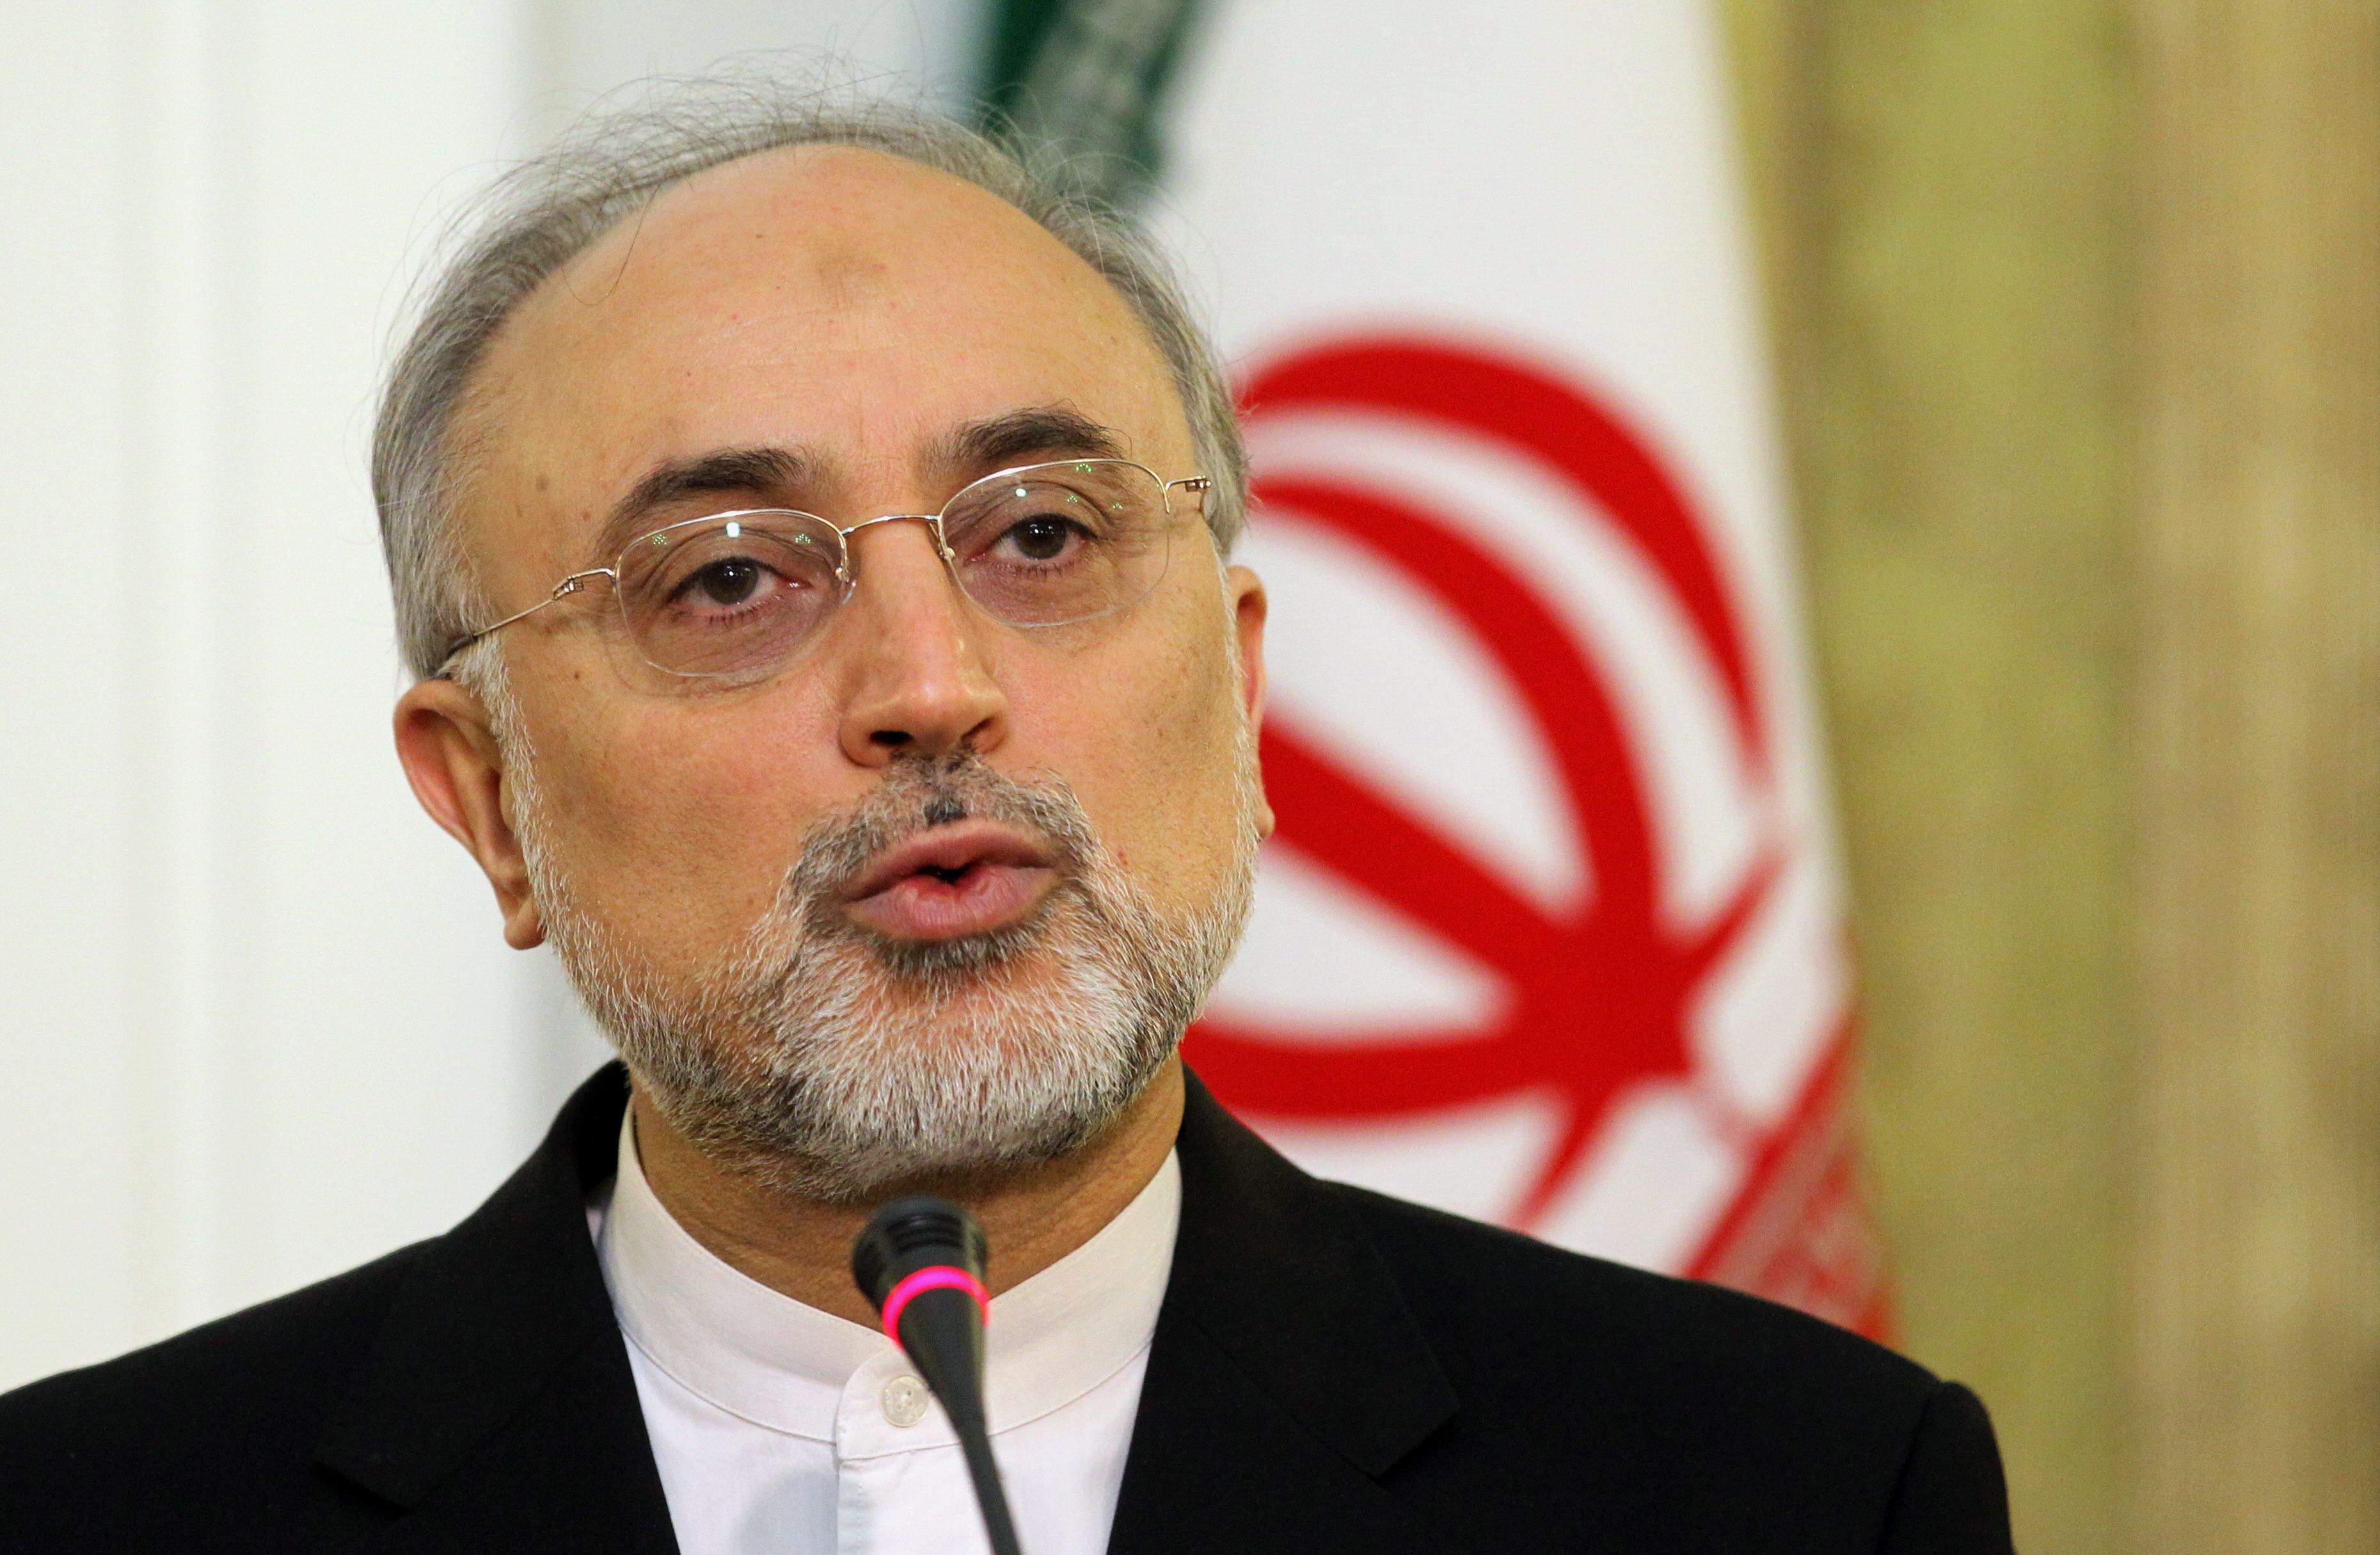 The head of Iran's Atomic Energy Organization, Ali Akbar Salehi